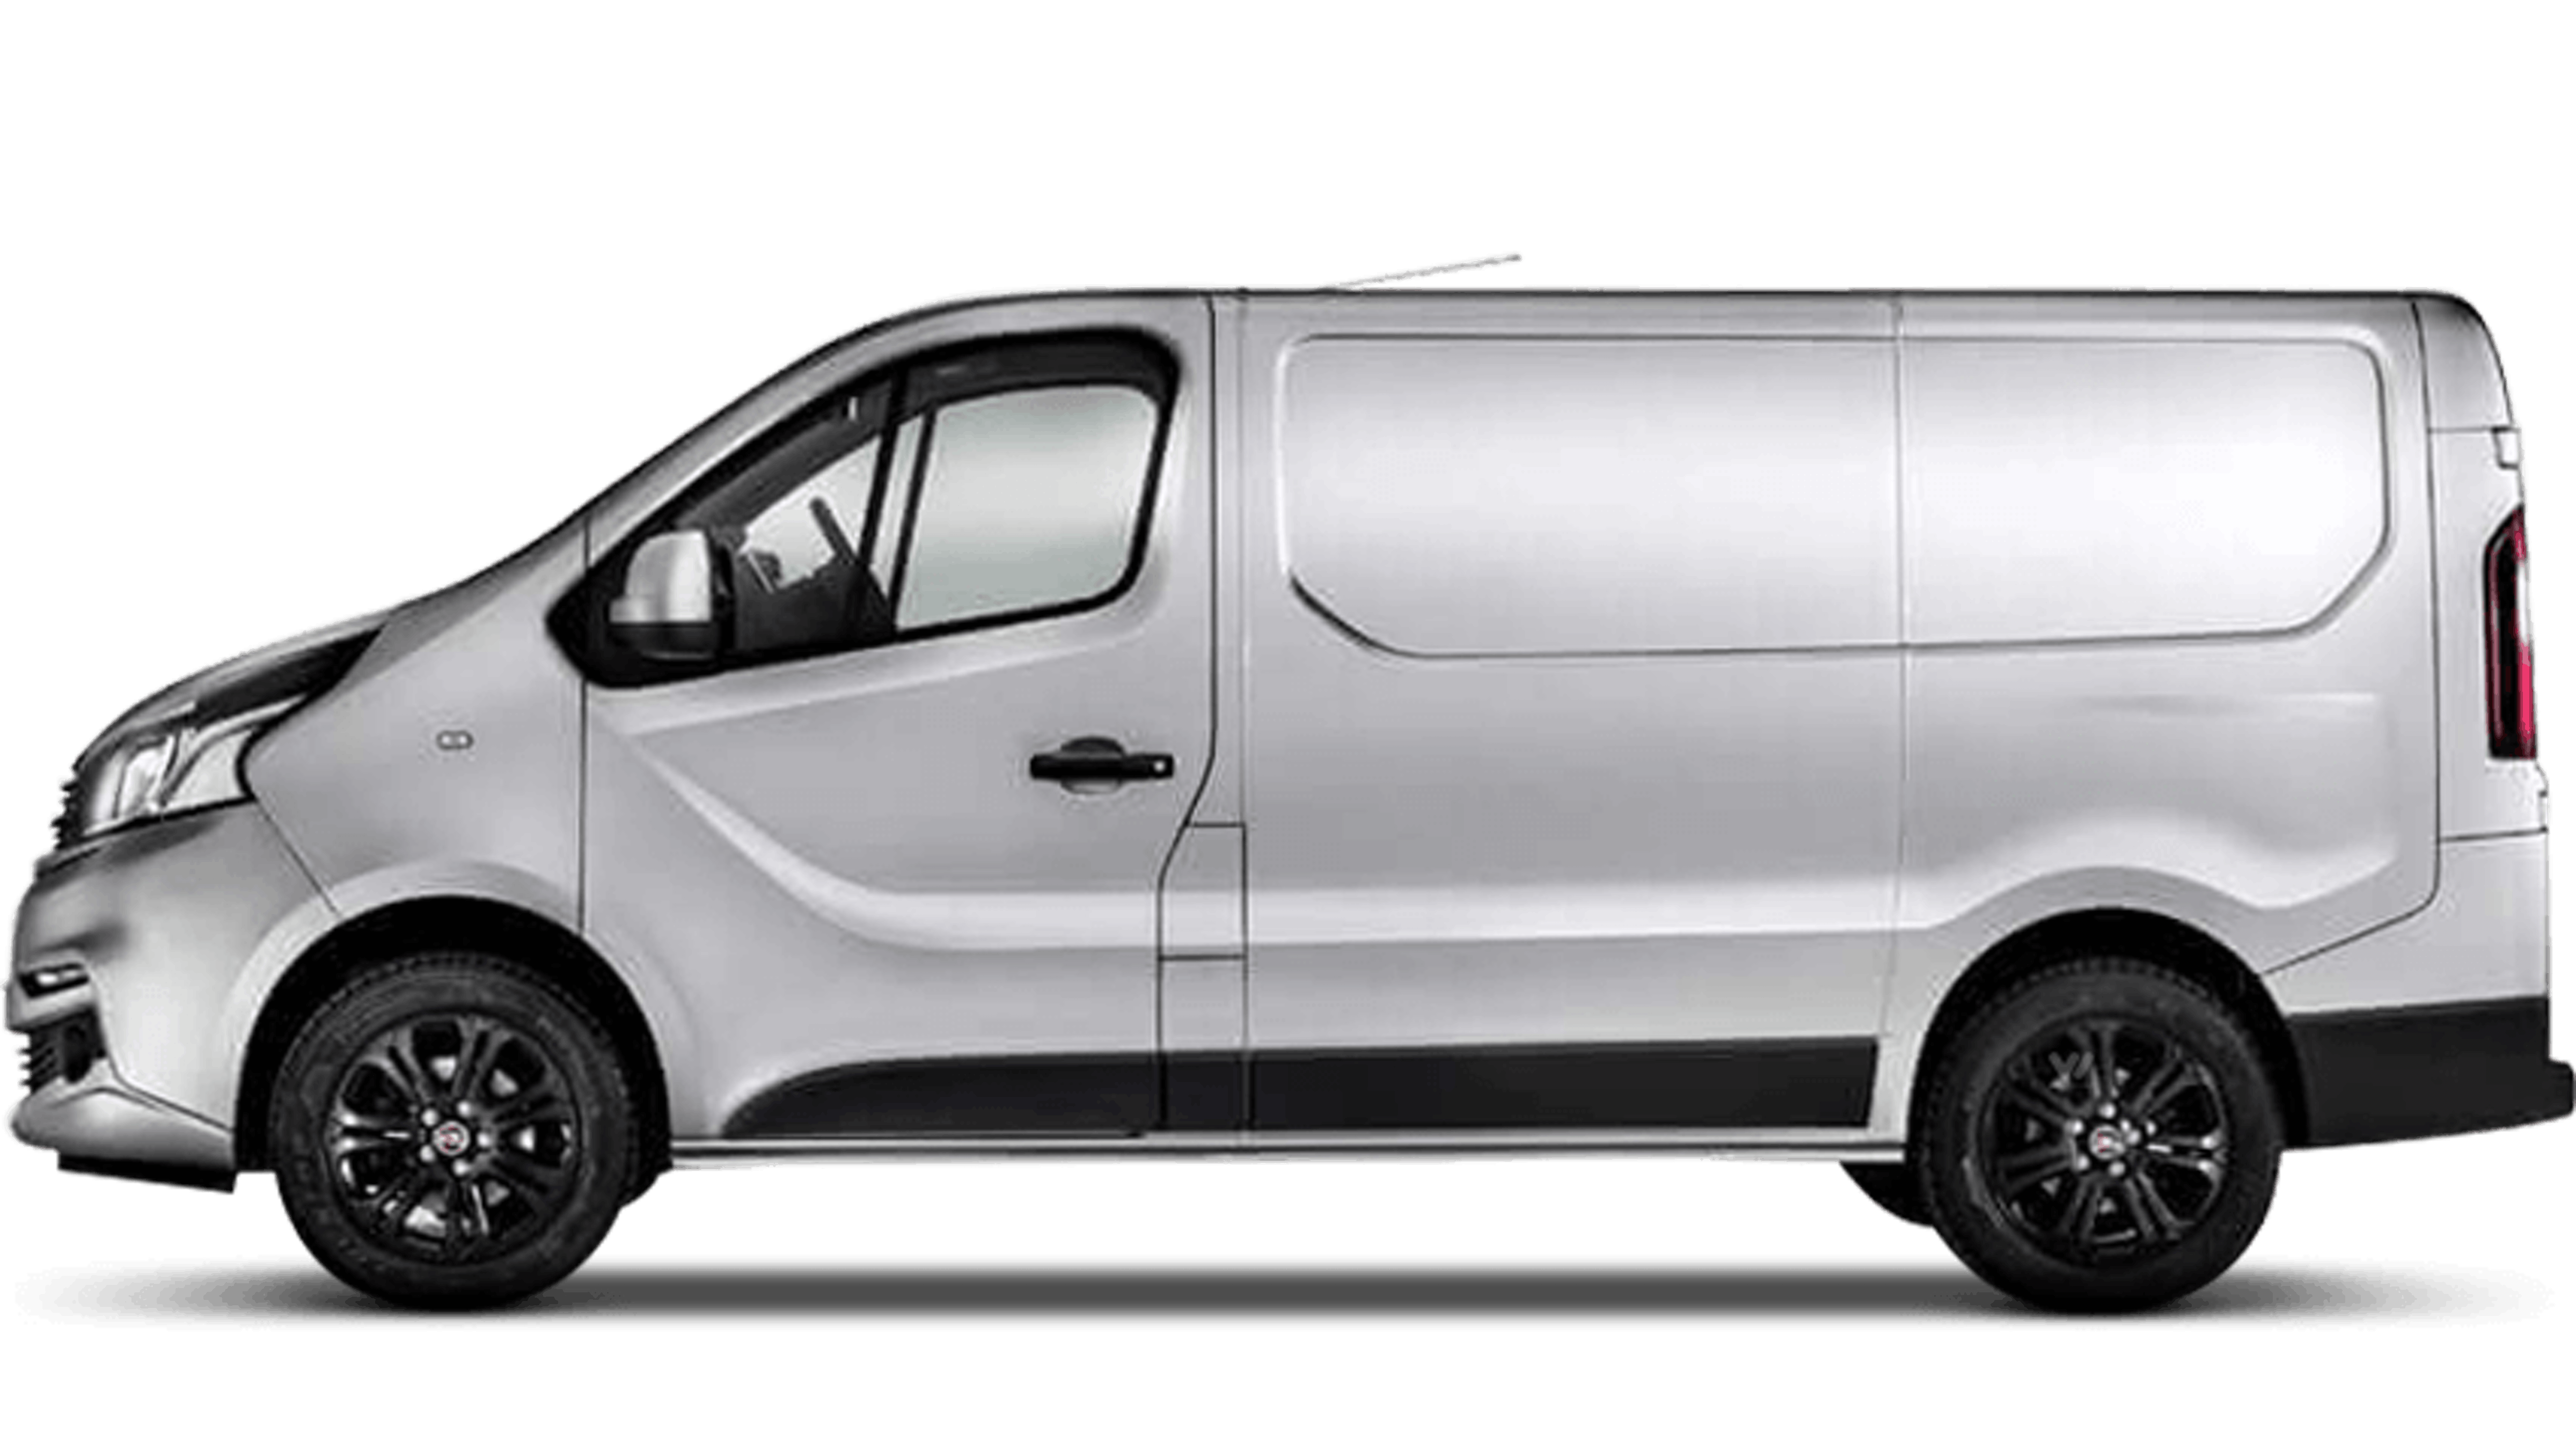 Fiat Talento Combi minivan specifications